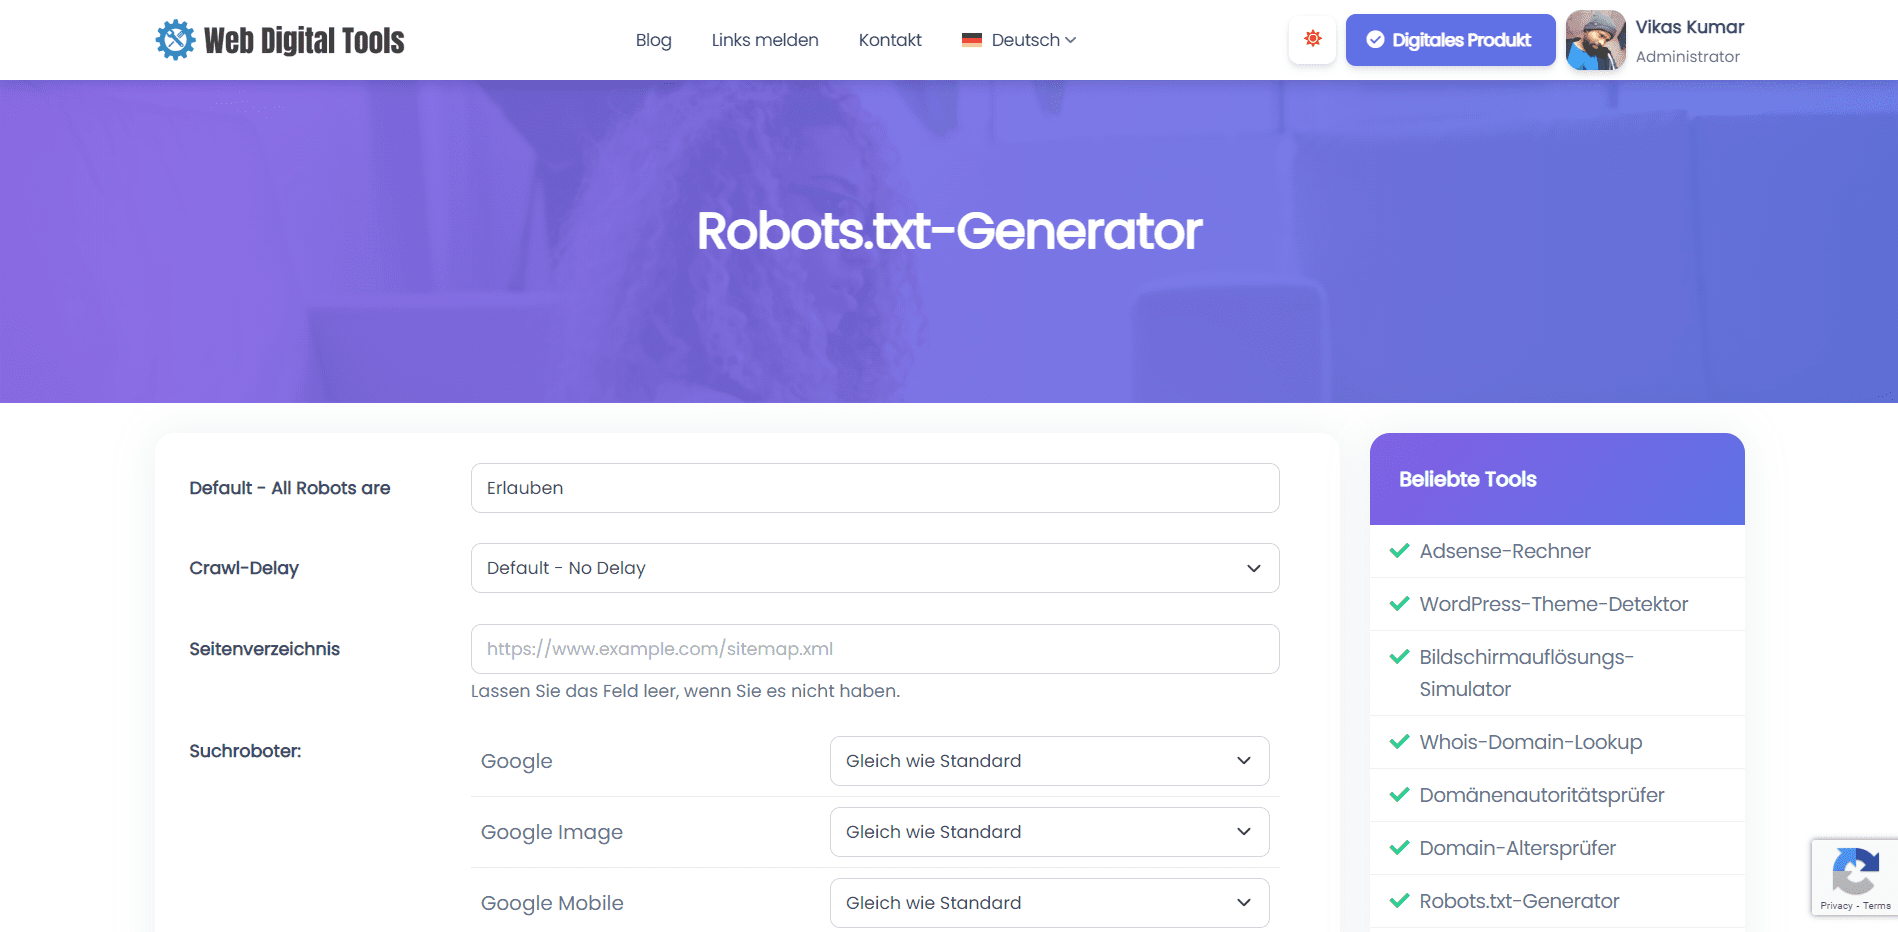 Robots.txt-Generator